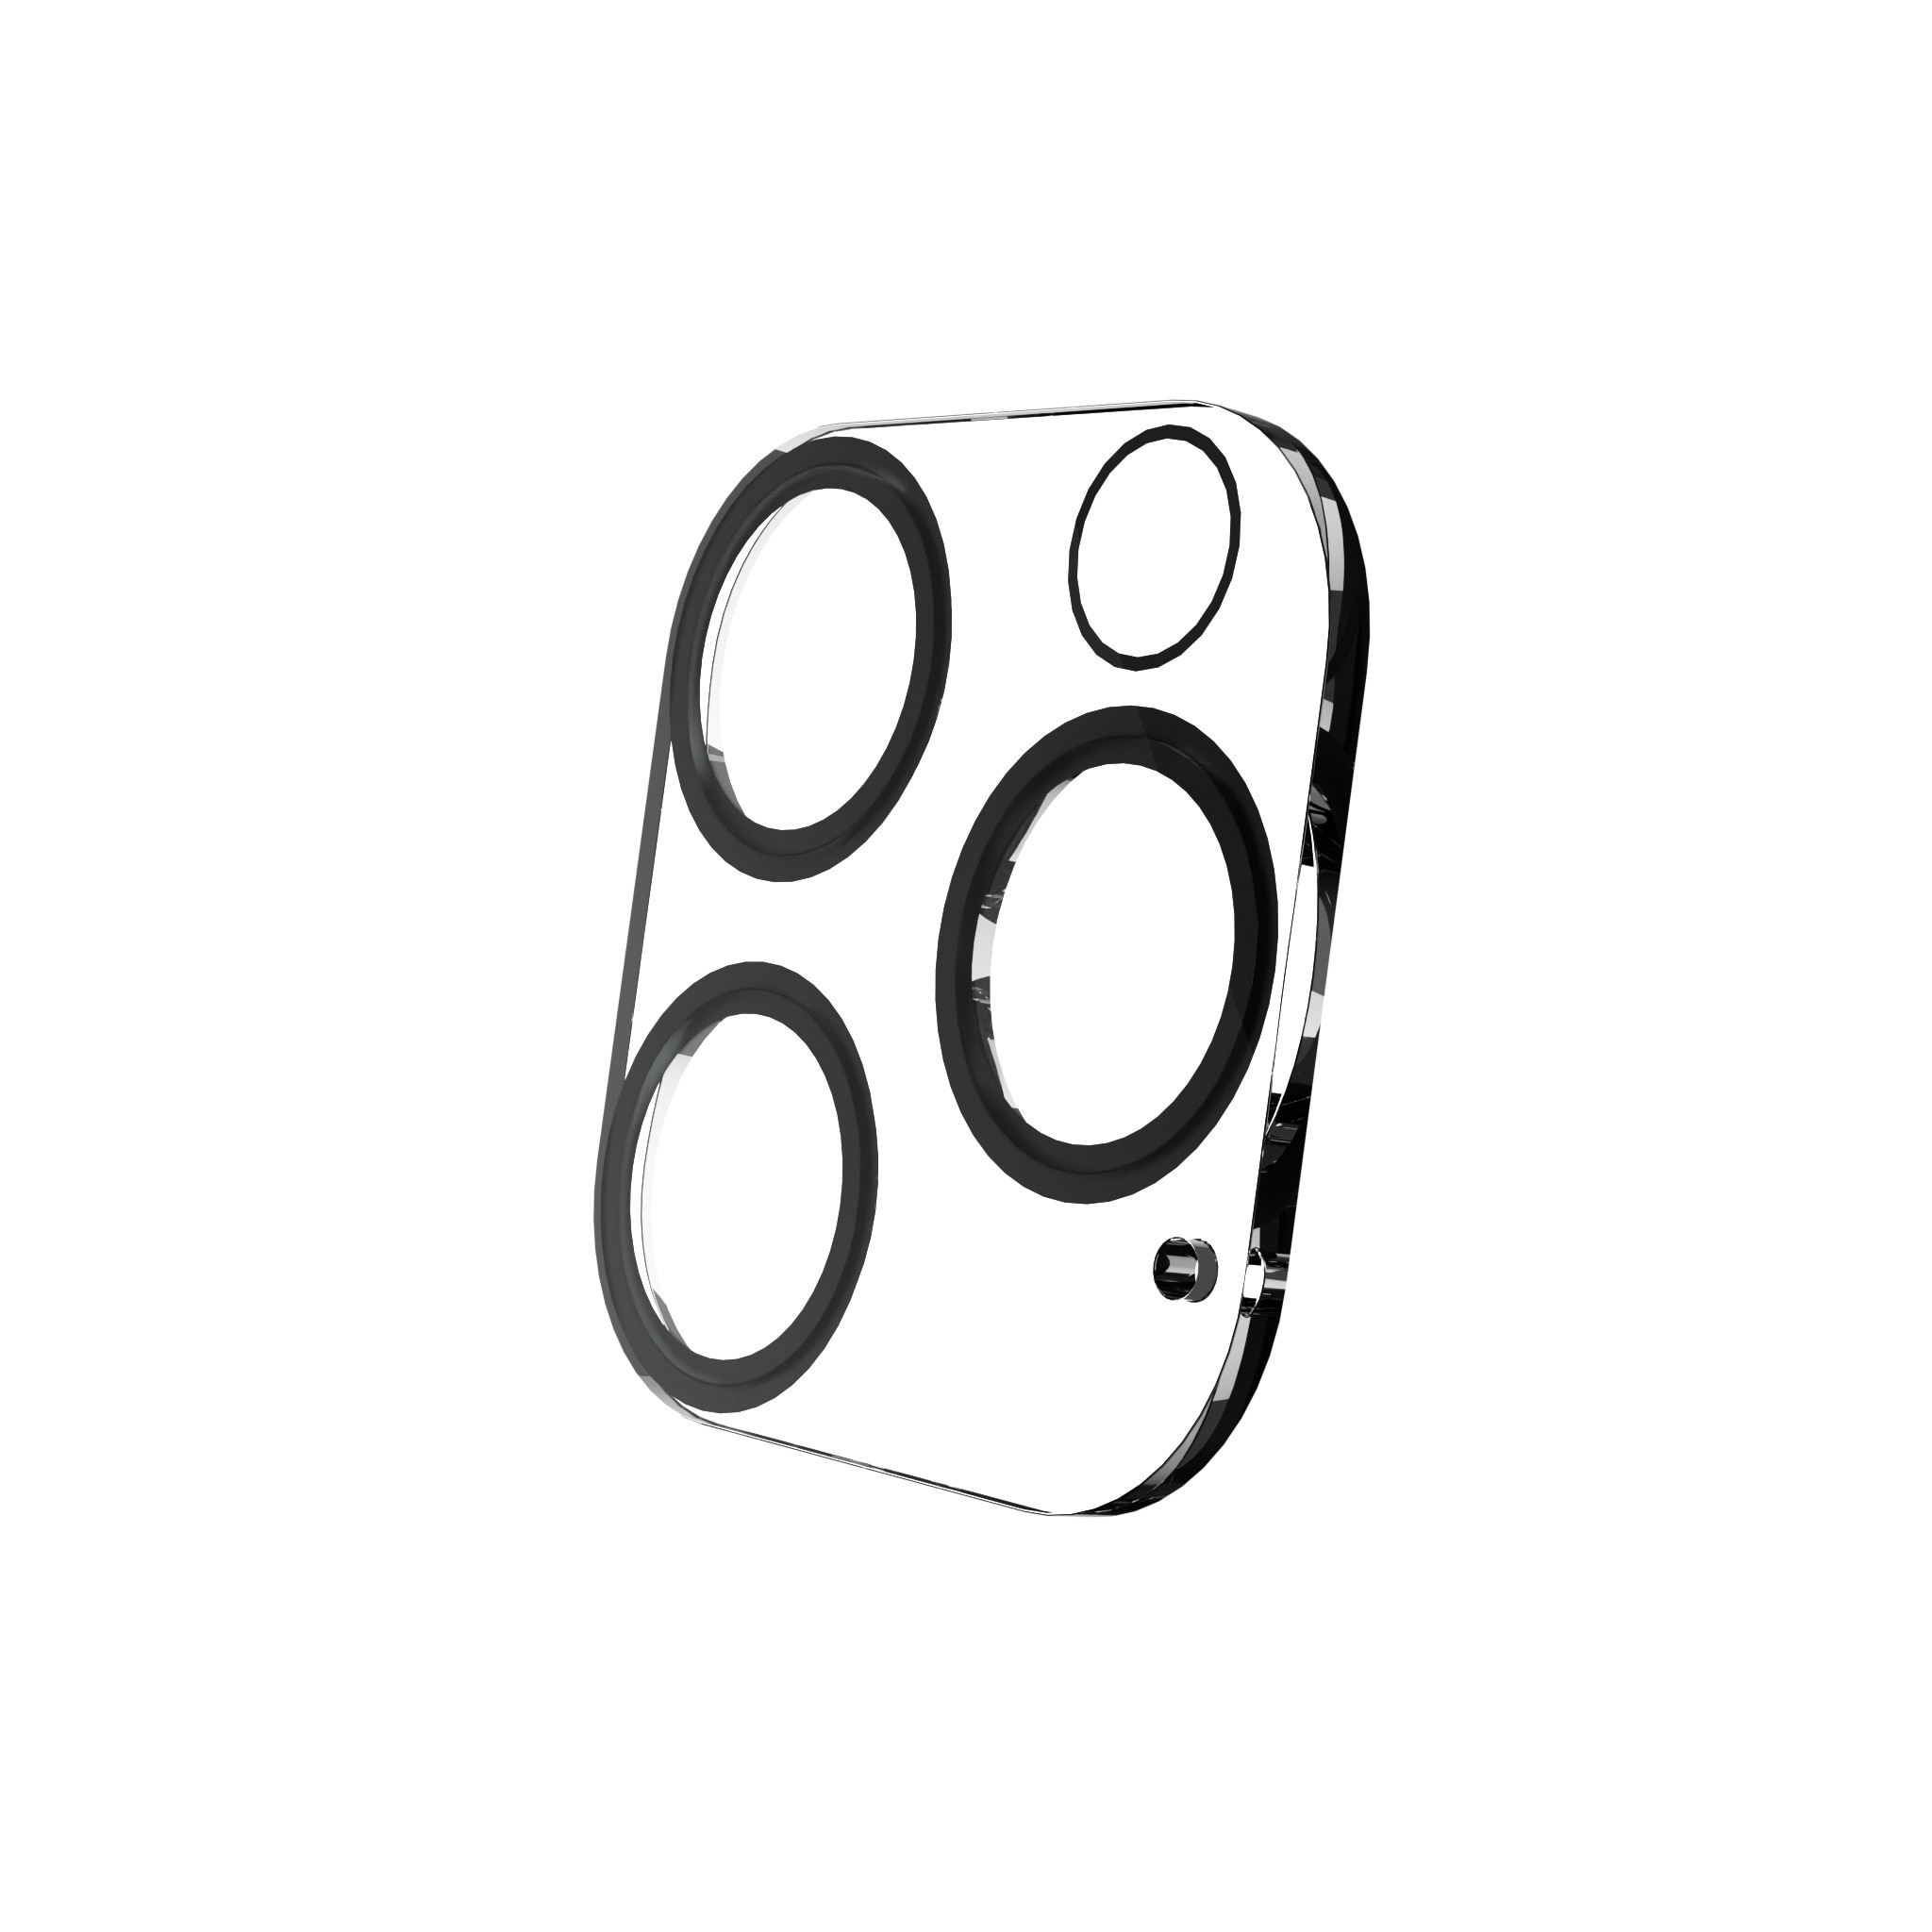 Panzerglas für Kamera Exoglass iPhone 15 Pro